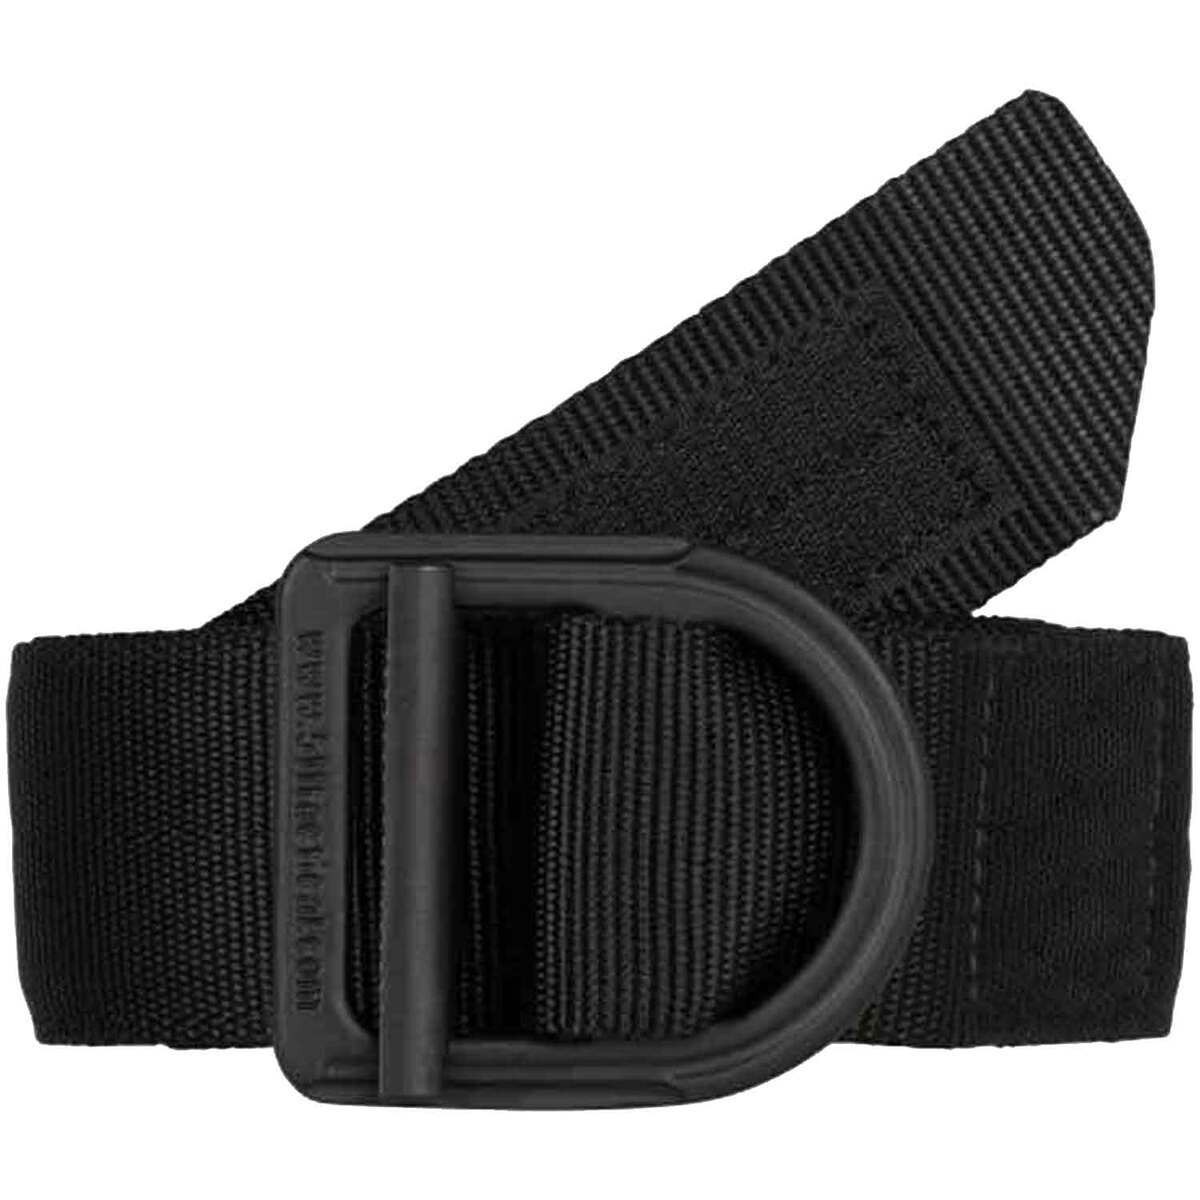  HUK mens Webbing Belt, Black, One Size US : Sports